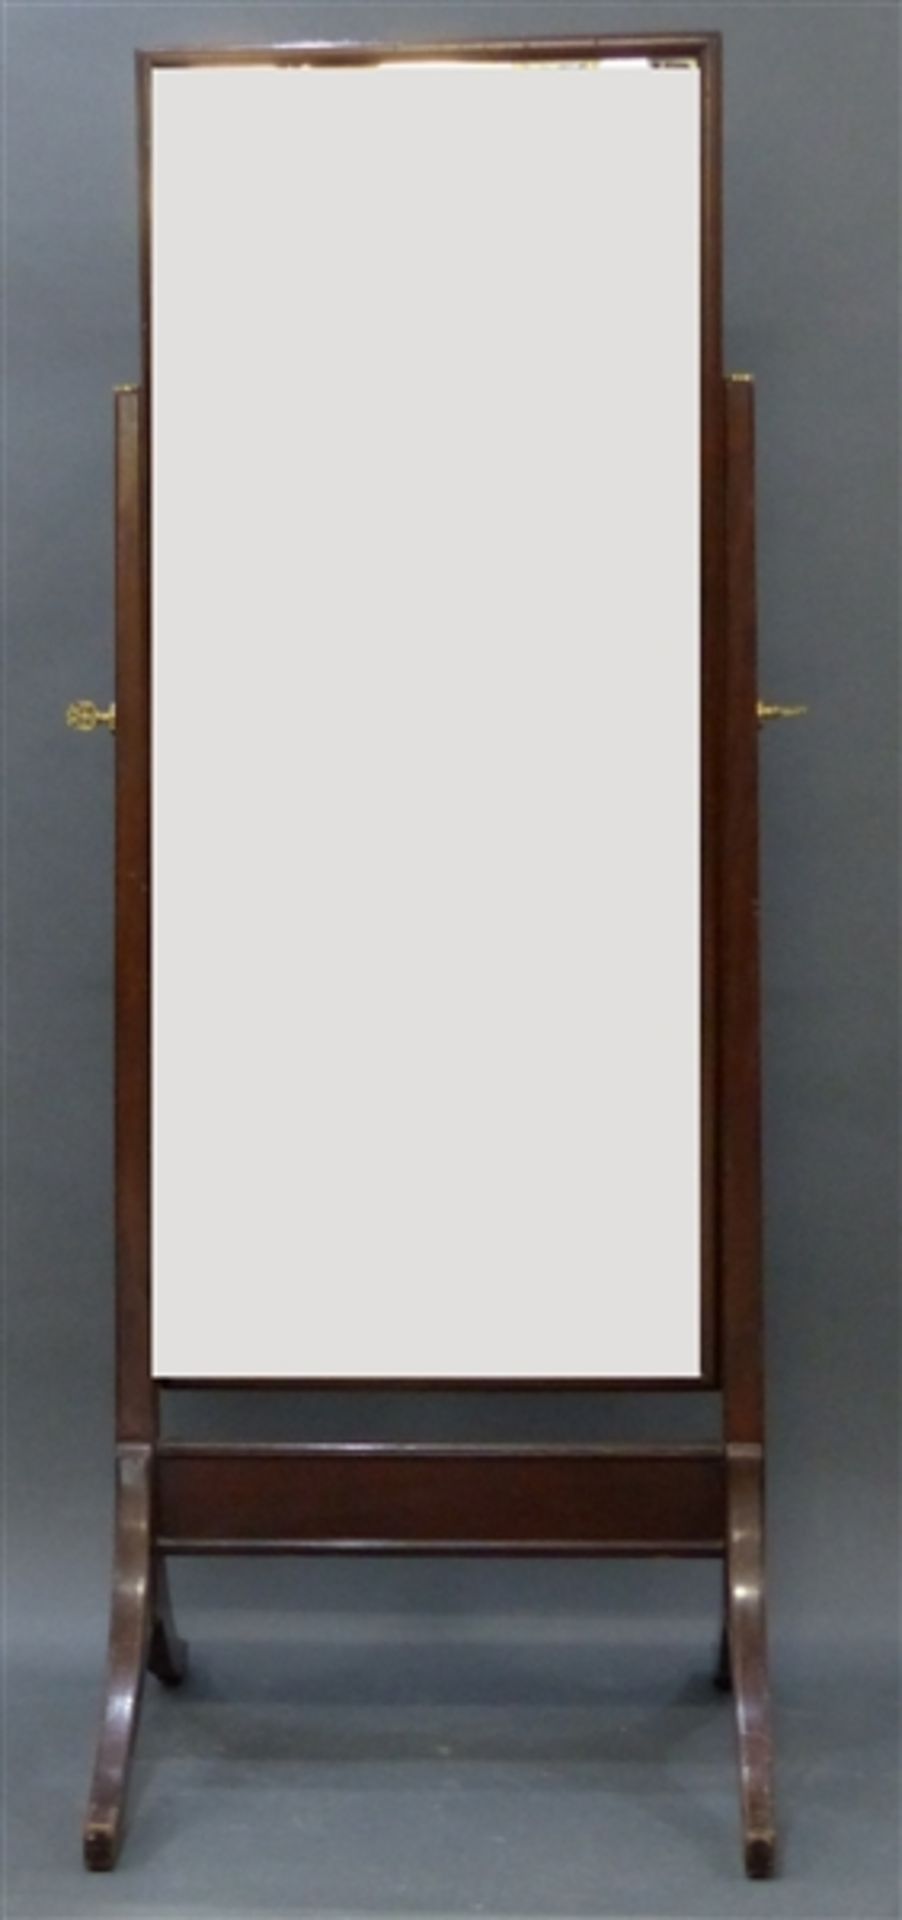 Standspiegel 8 Psyche, England, um 1900, Mahagoni, h 149 cm, b 58 cm,